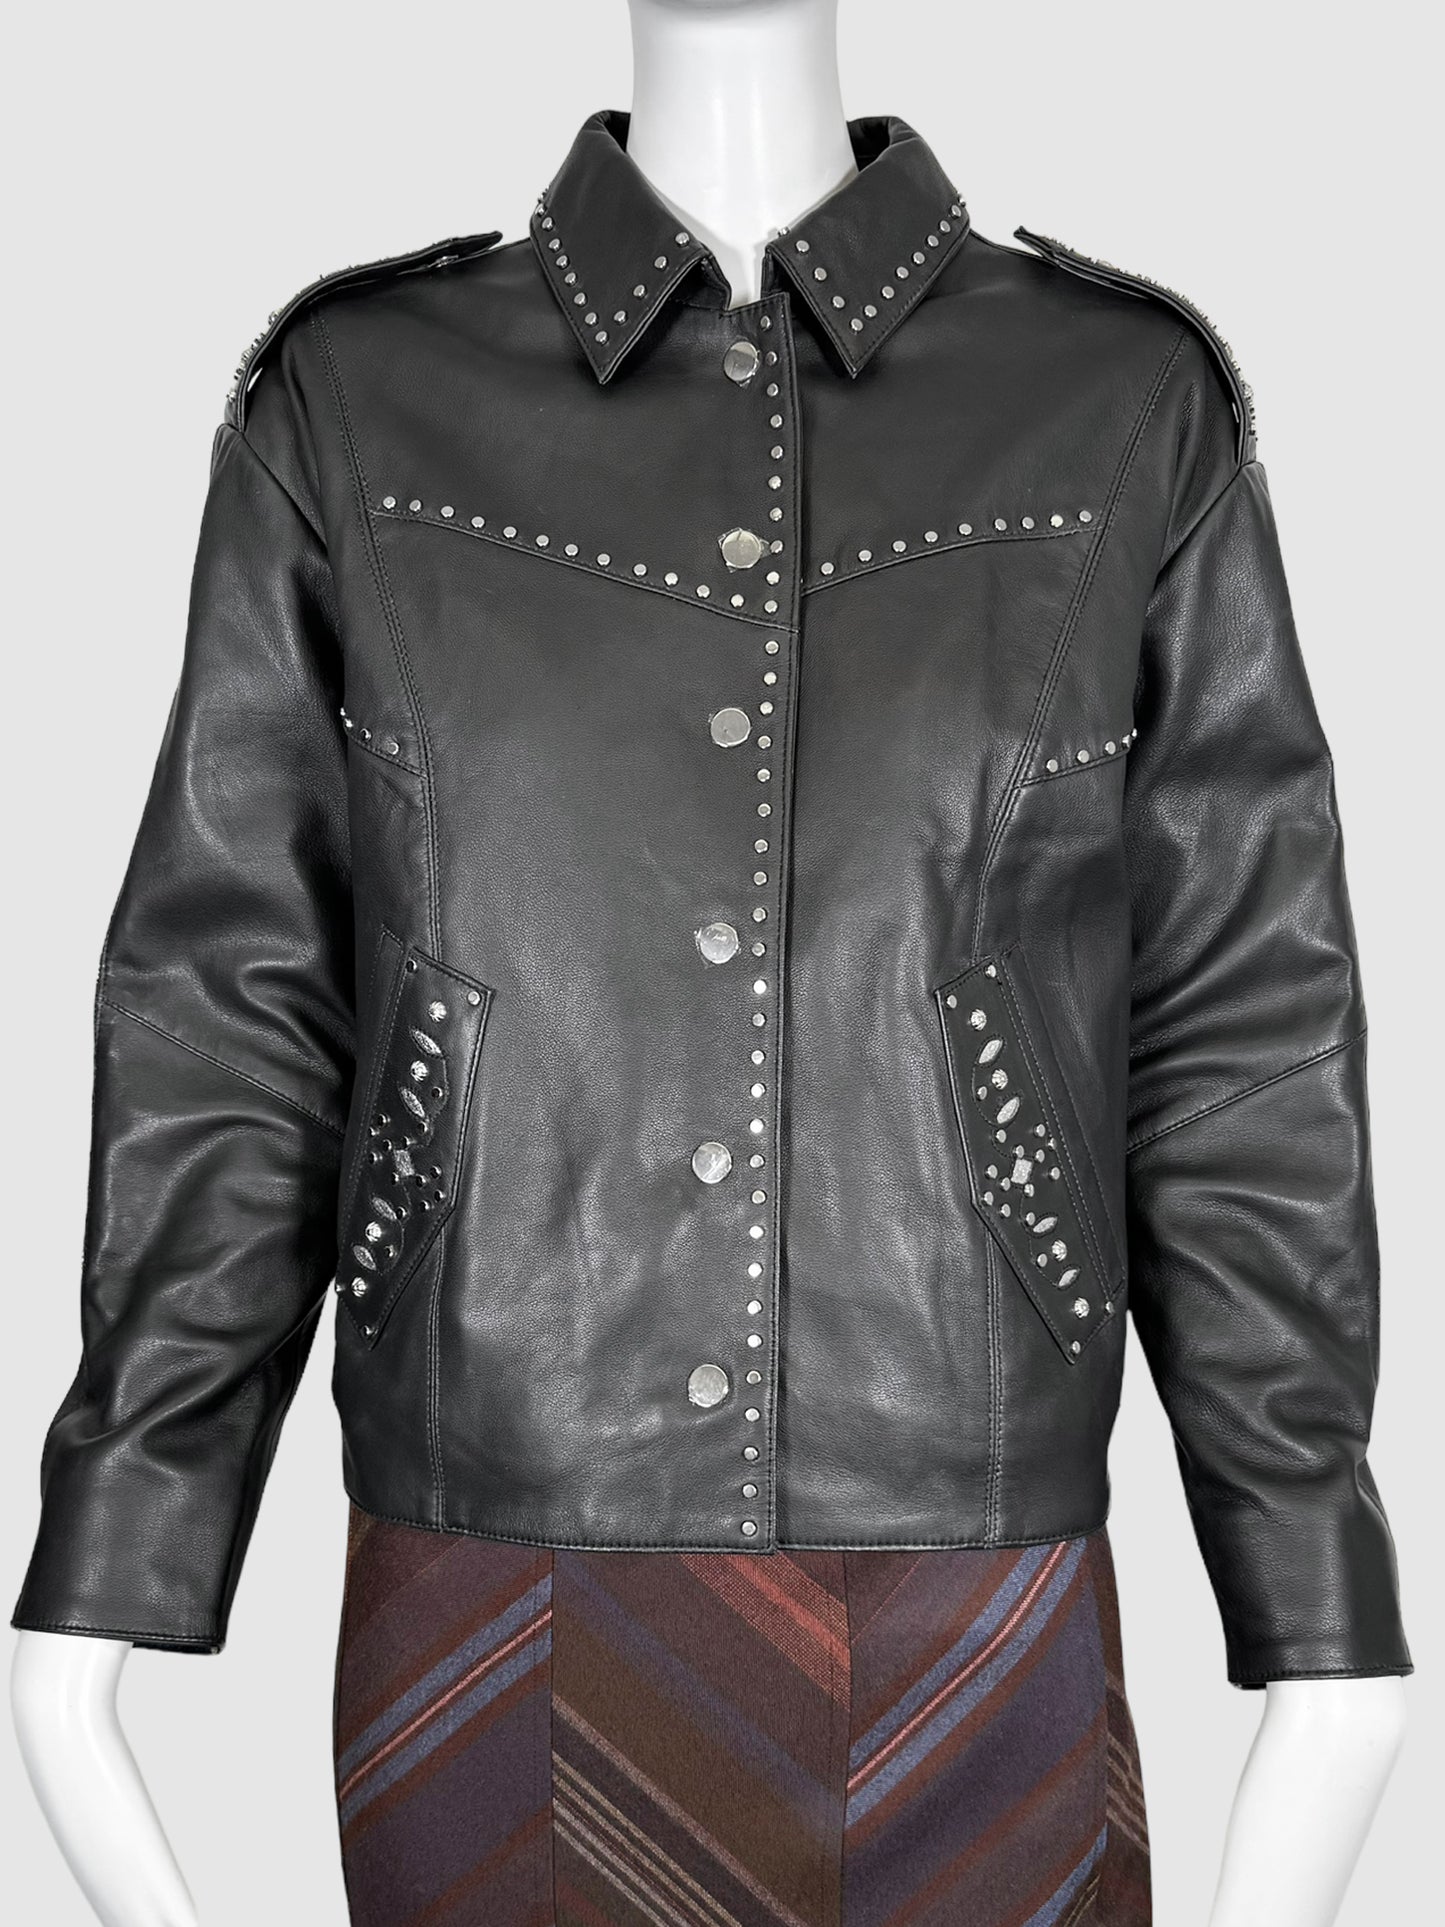 Belvisa Studded Leather Jacket - Size 36